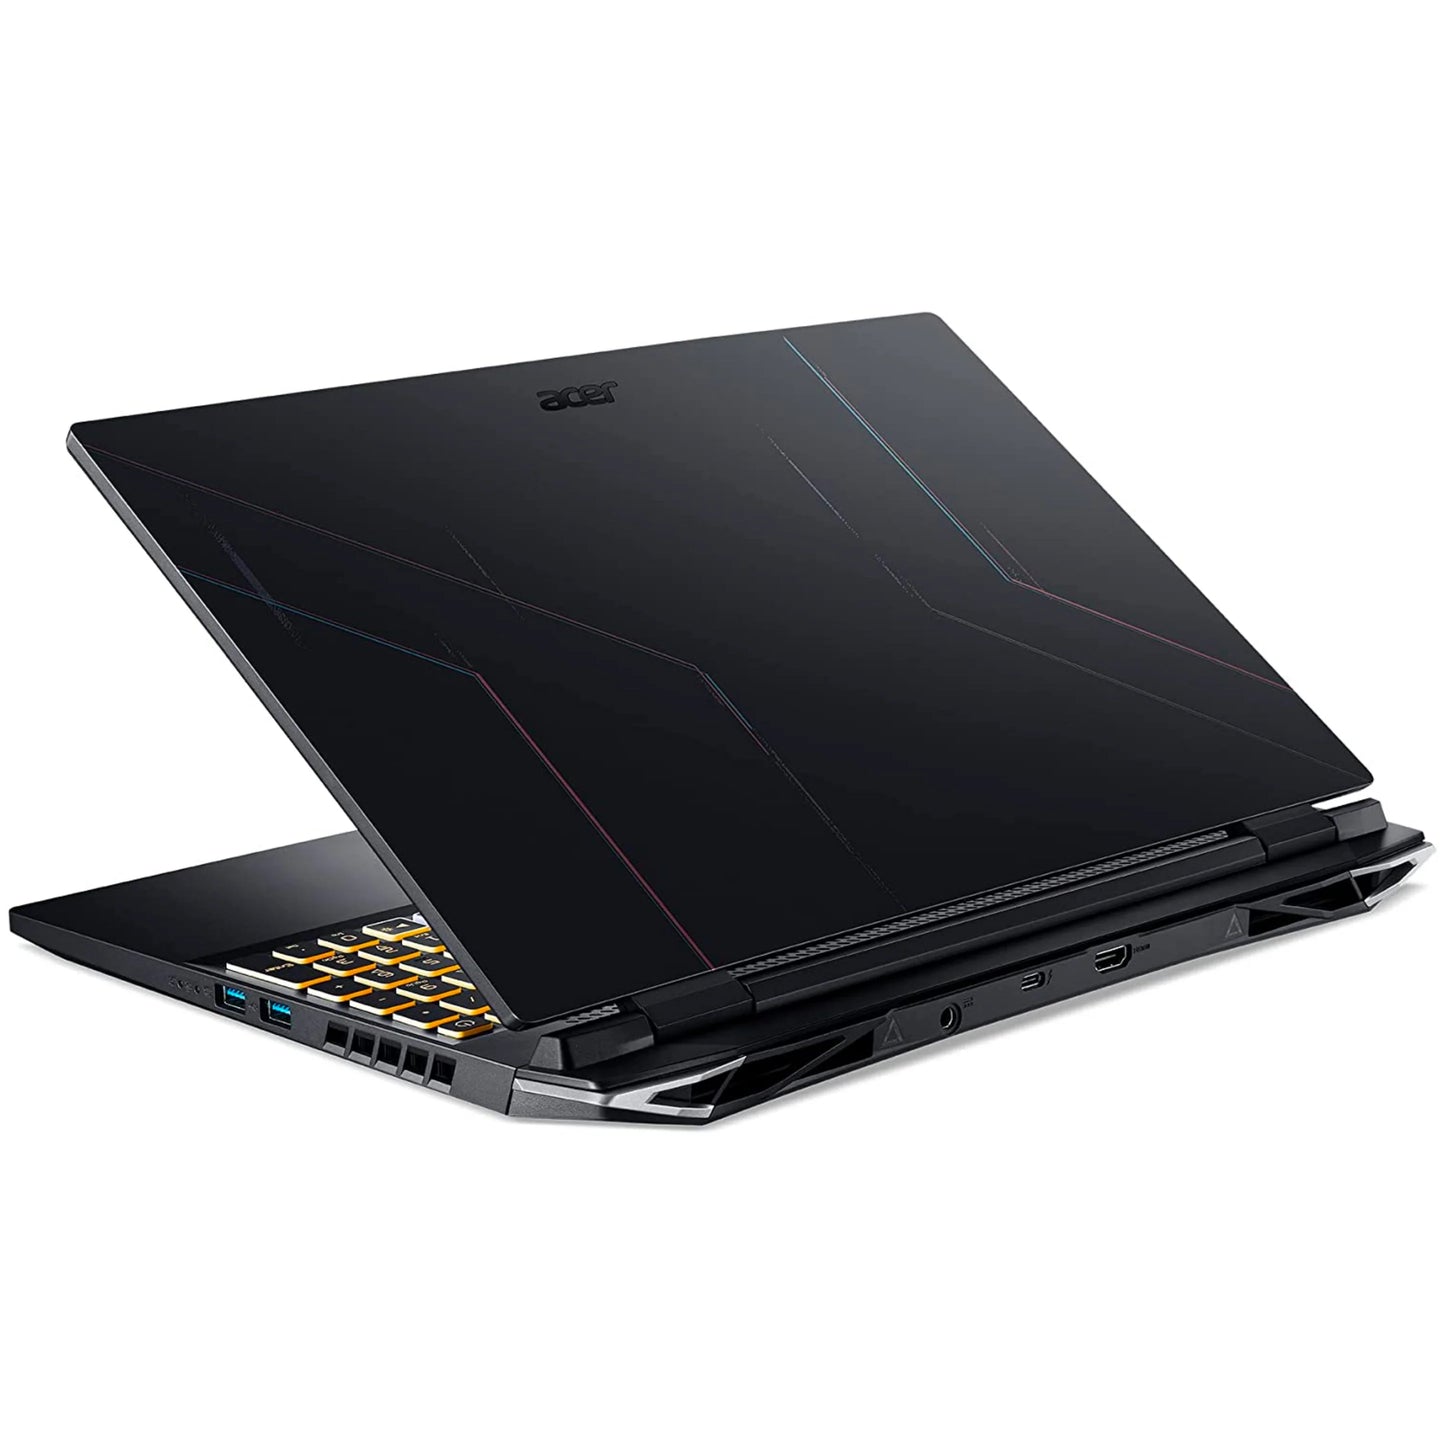 Notebook Acer Nitro 5 Intel i7-12700H RTX 3060 6GB